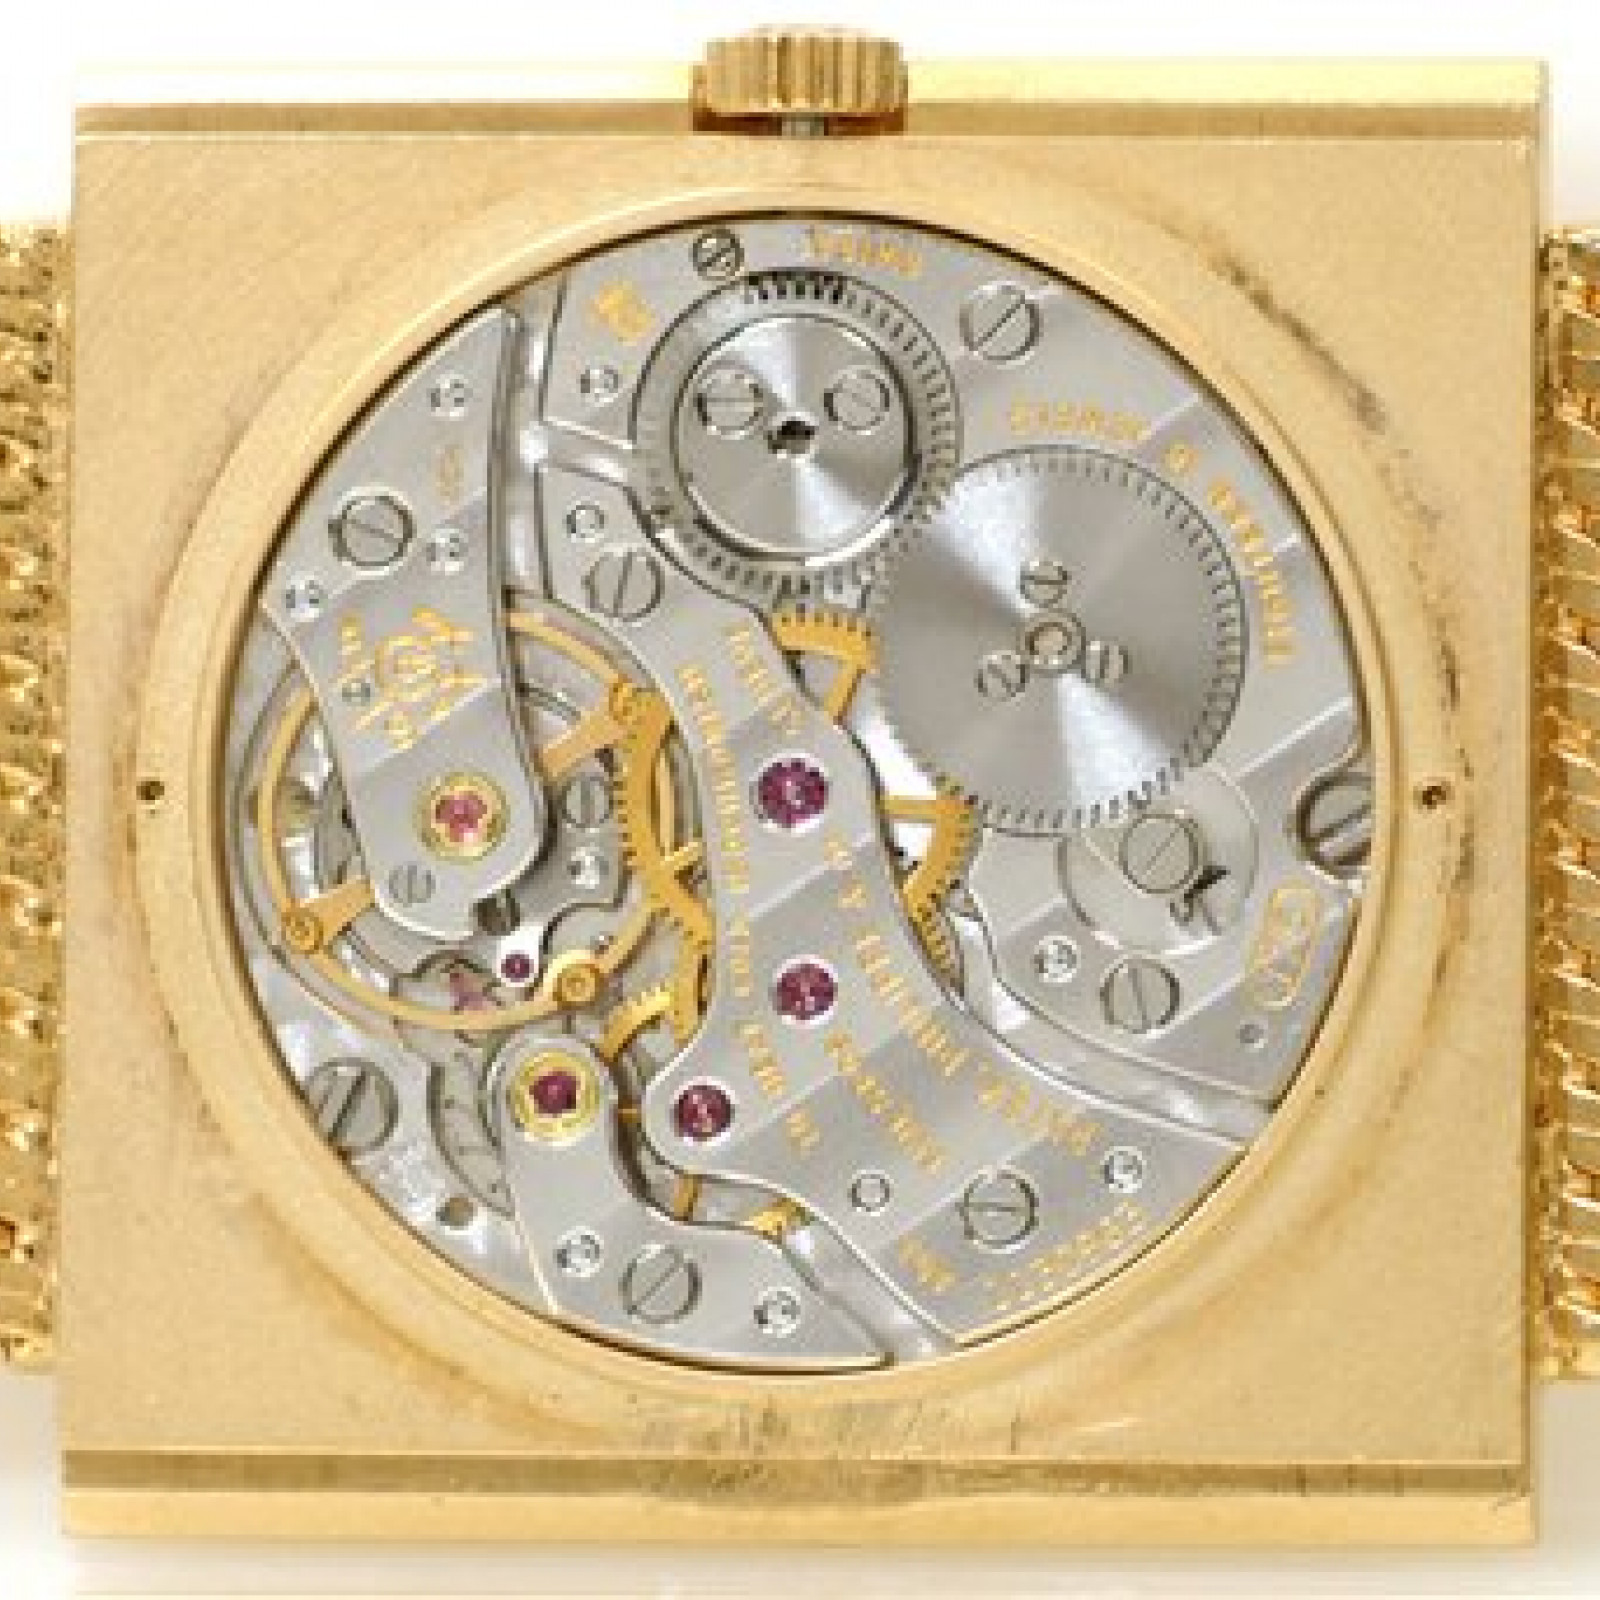 Patek Philippe Square Case 3490/1J Gold Watch